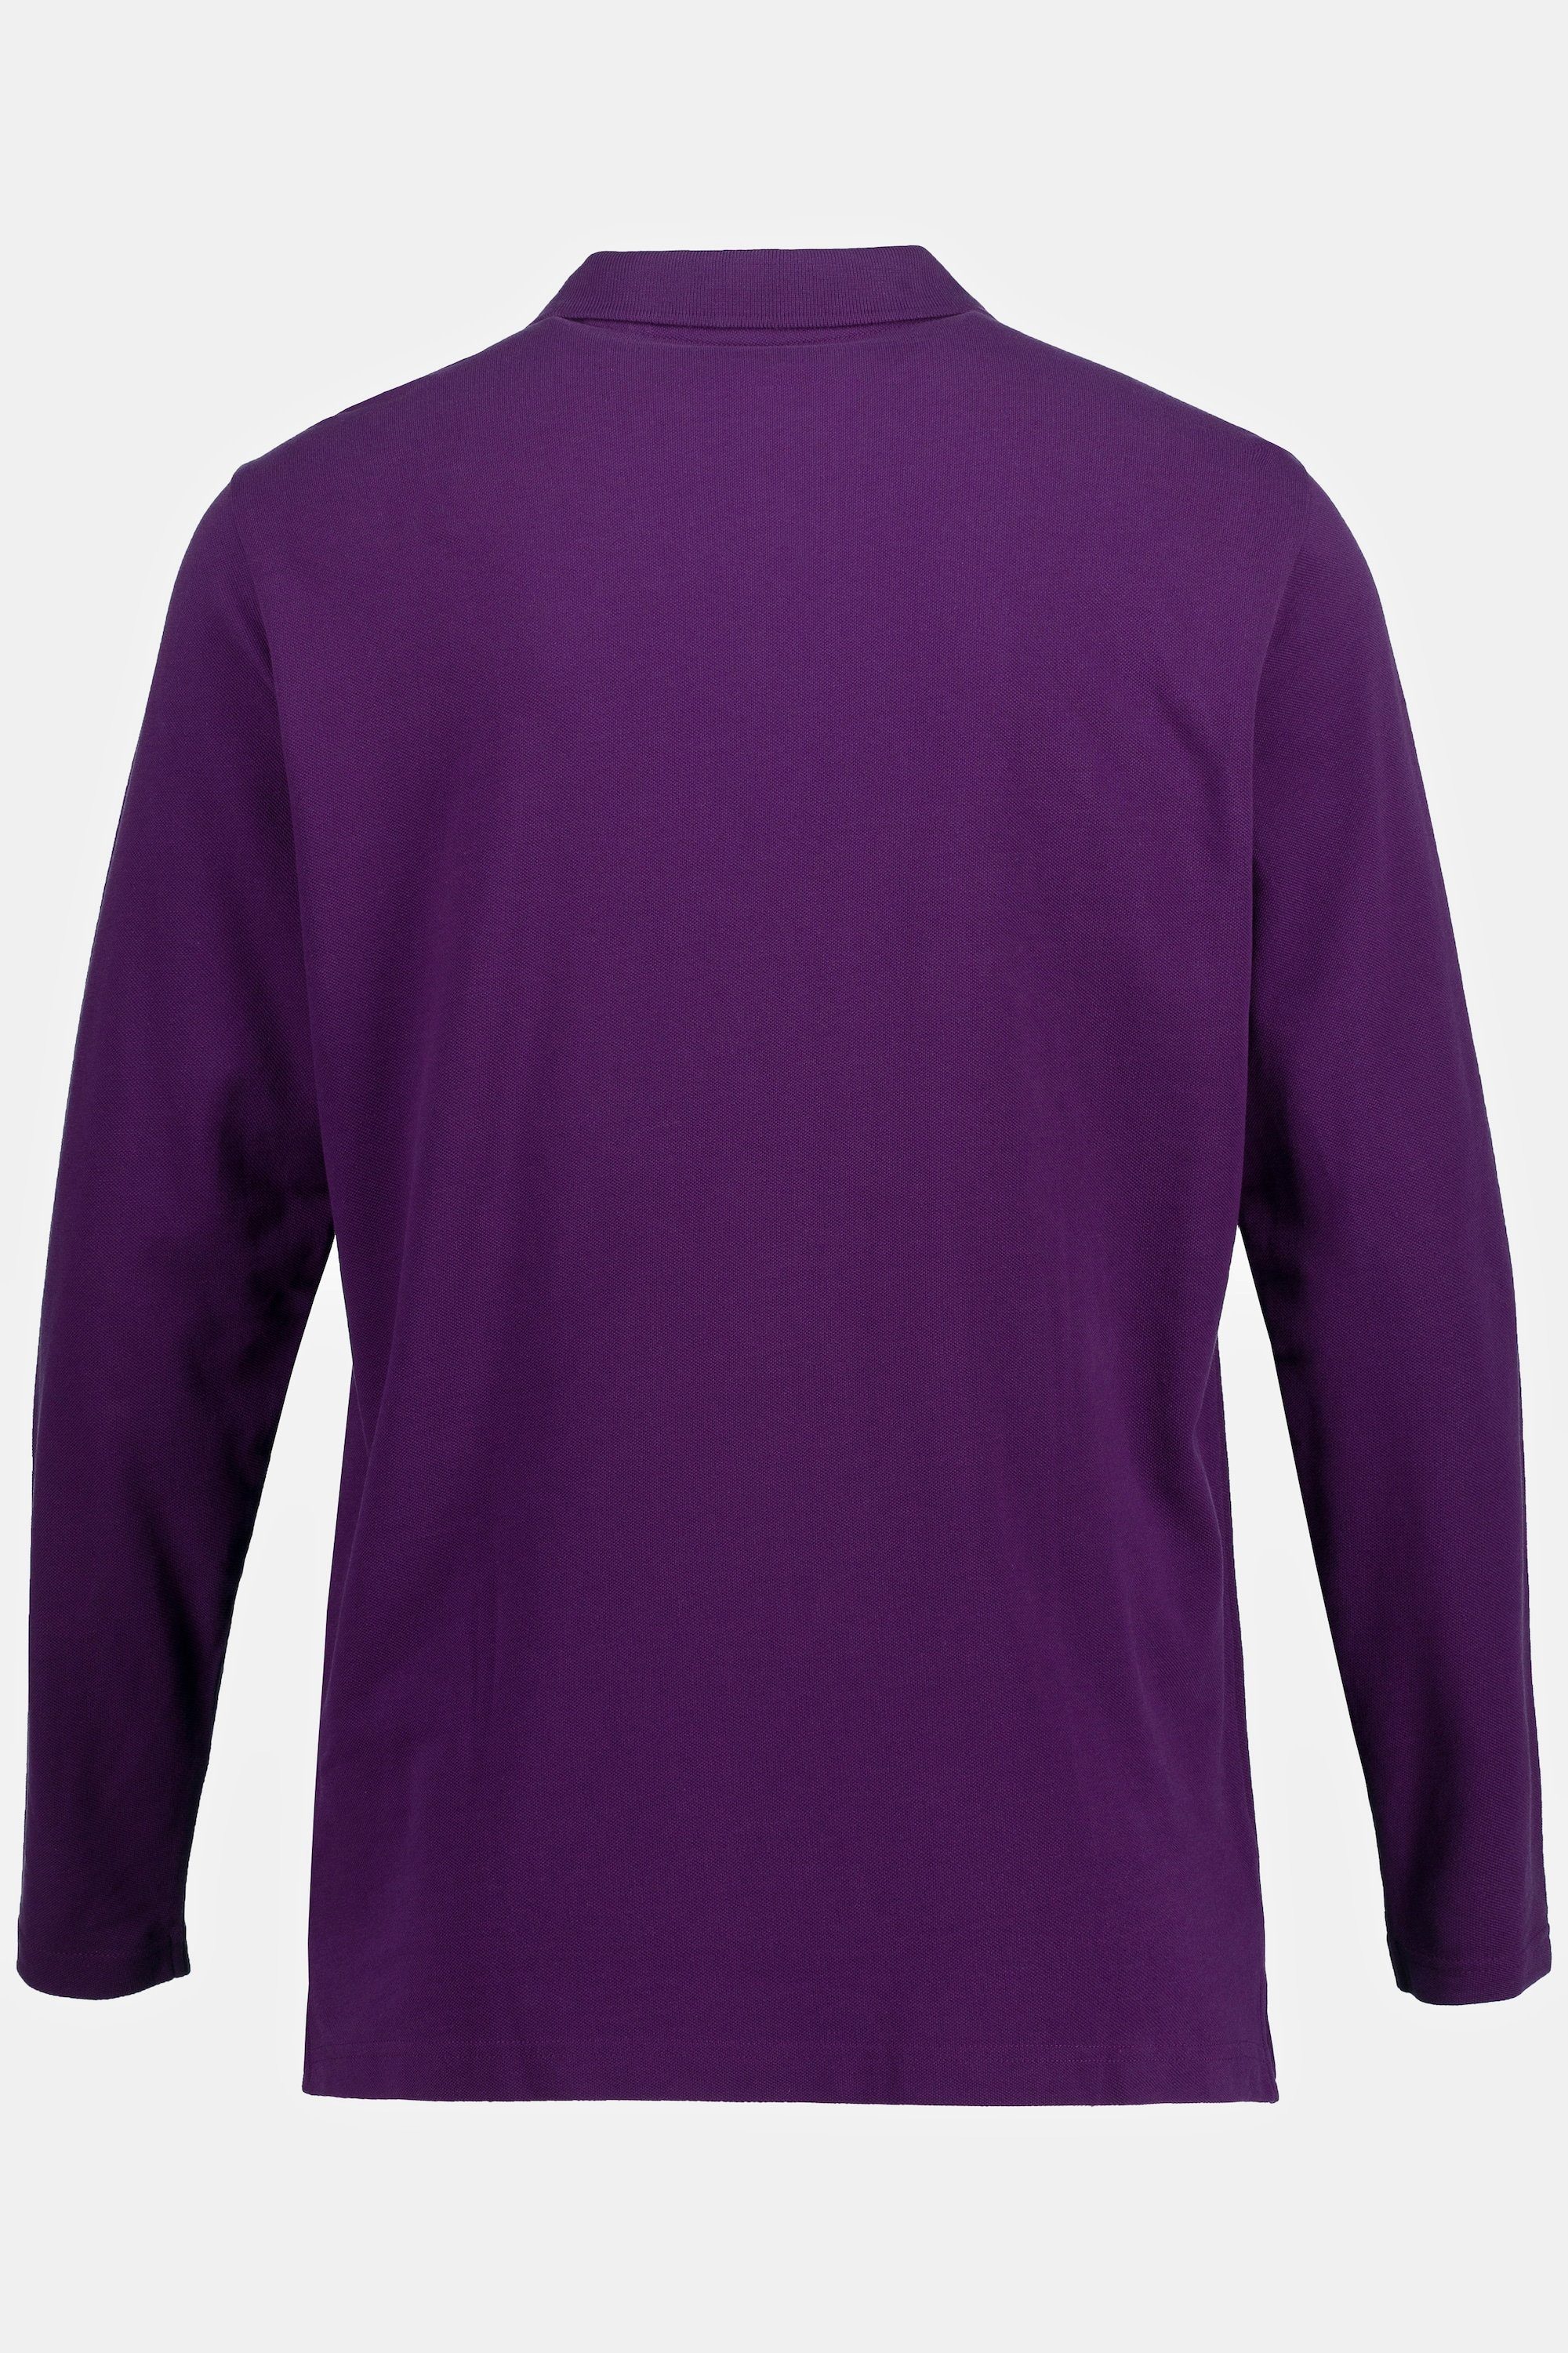 JP1880 Poloshirt Poloshirt Langarm XL Piqué violett bis 8 tiefes Basic